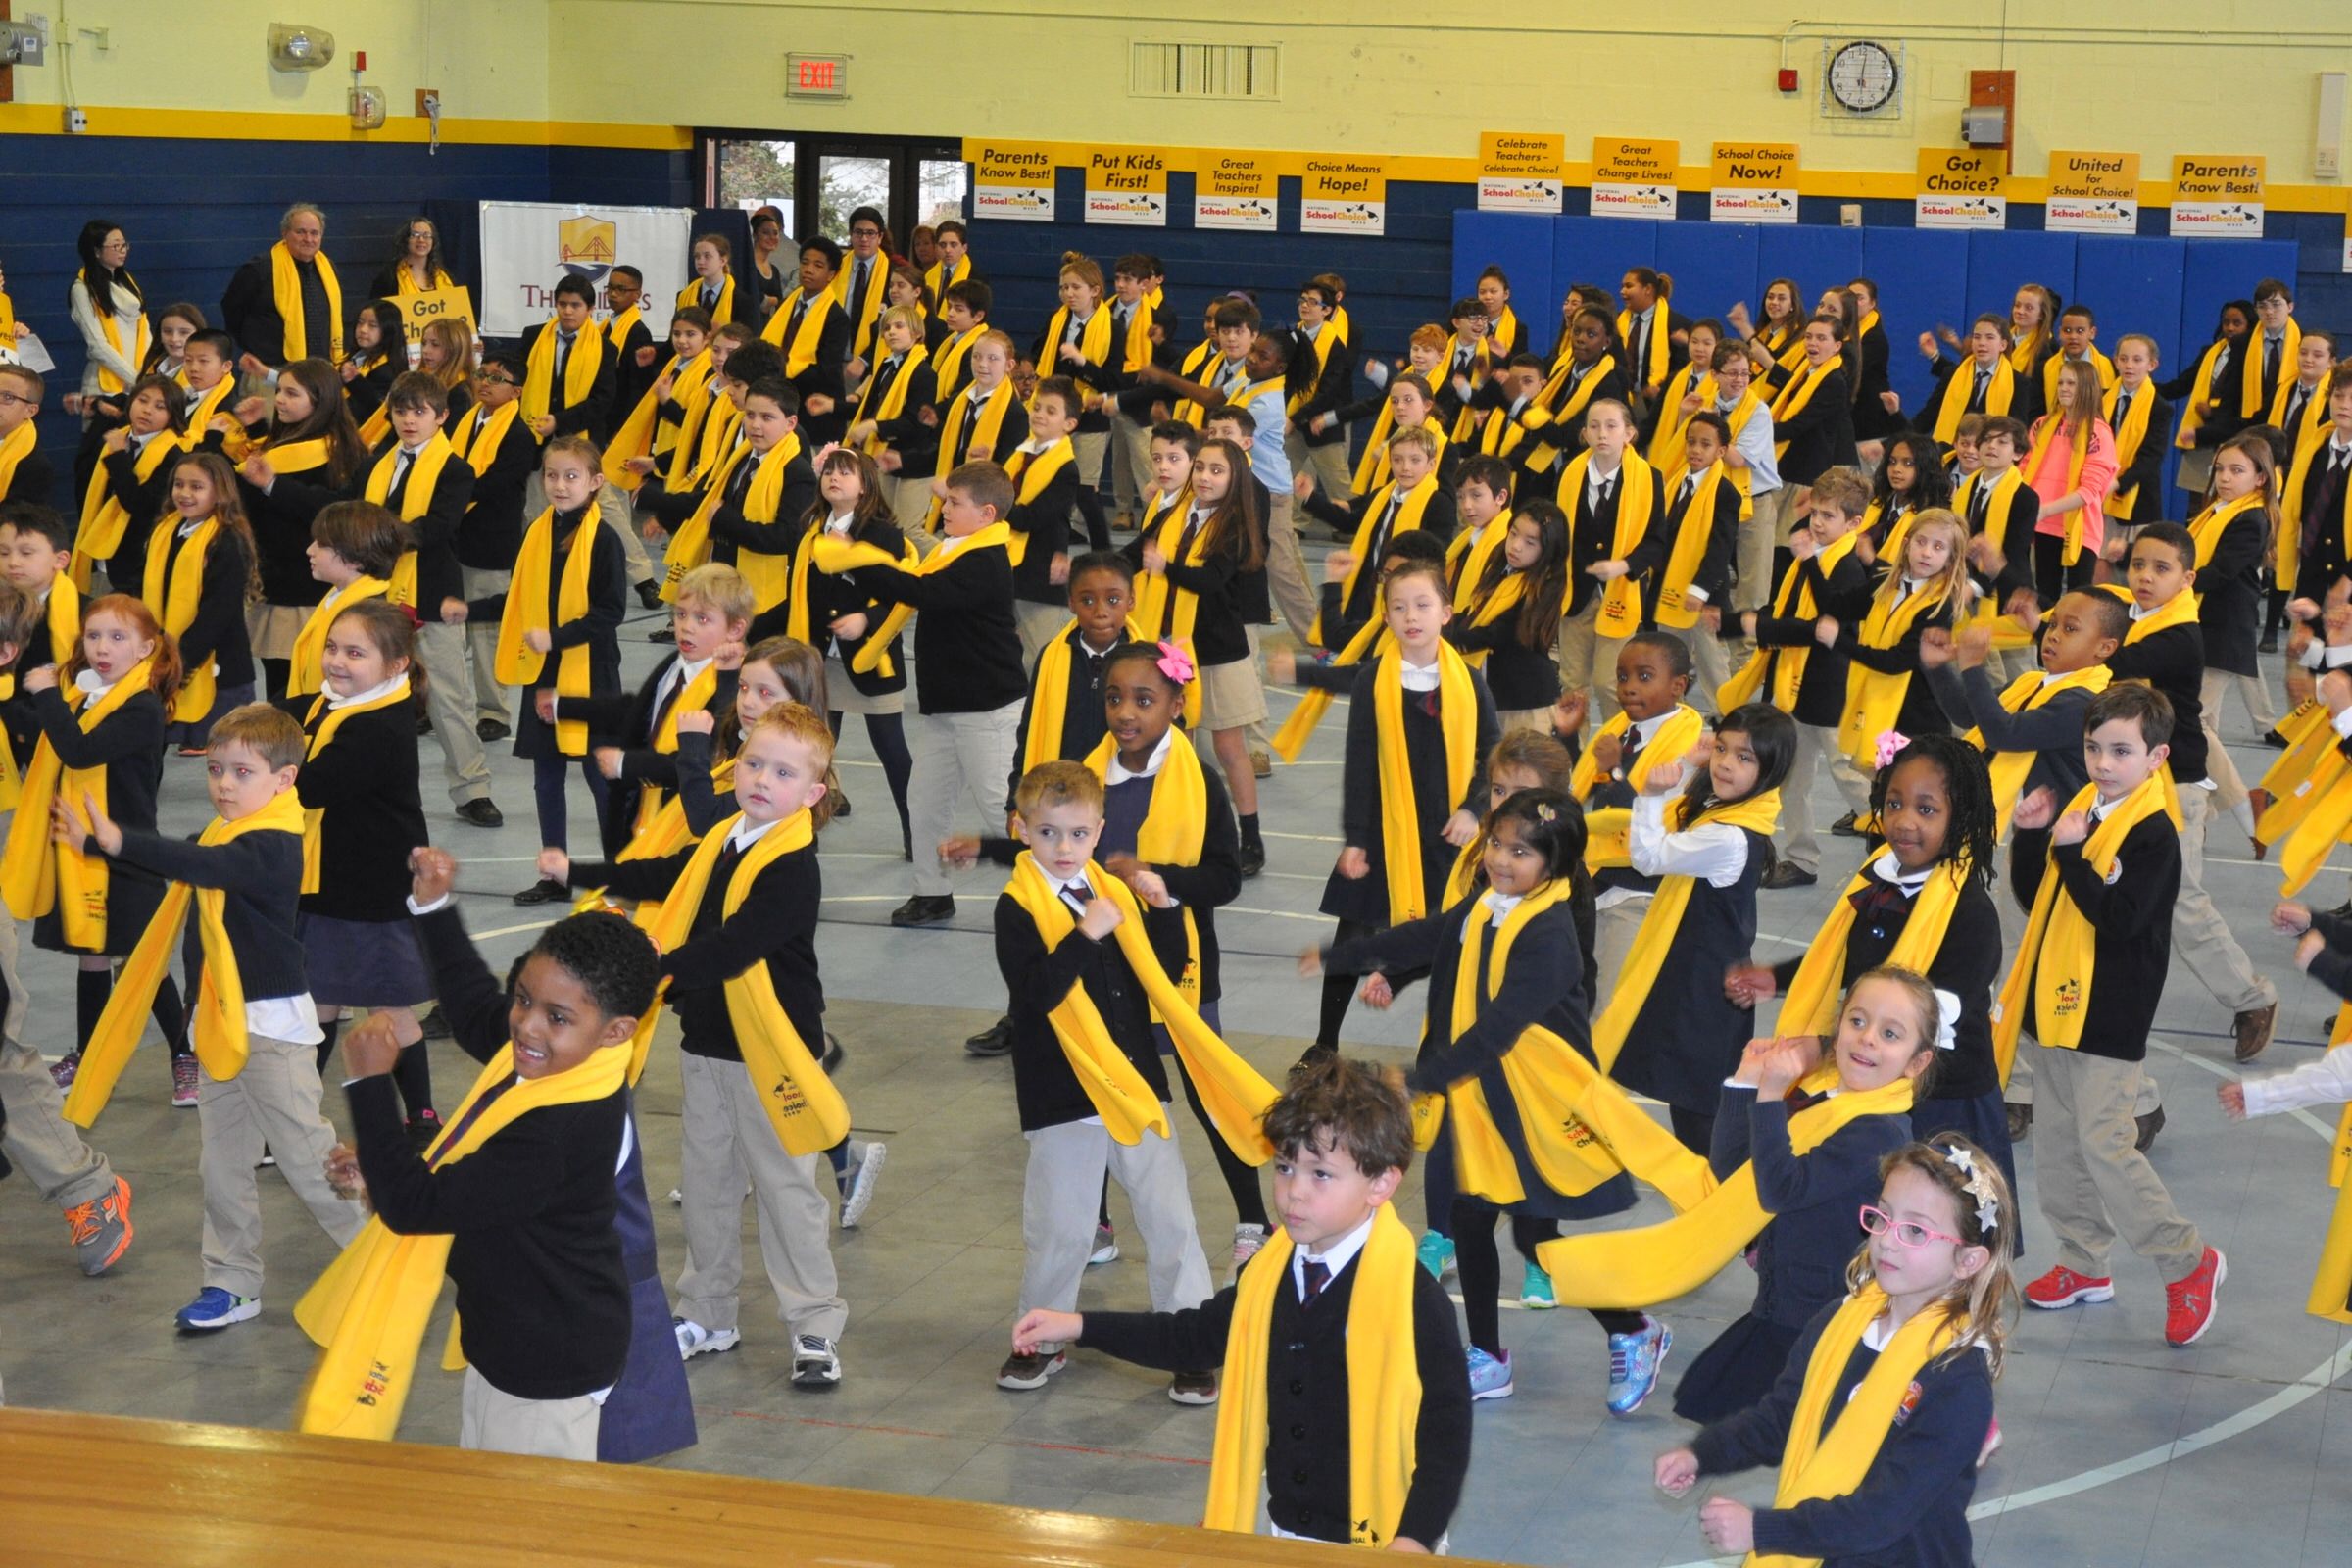 School dance performance - The Bridges Academy, West Islip, NY